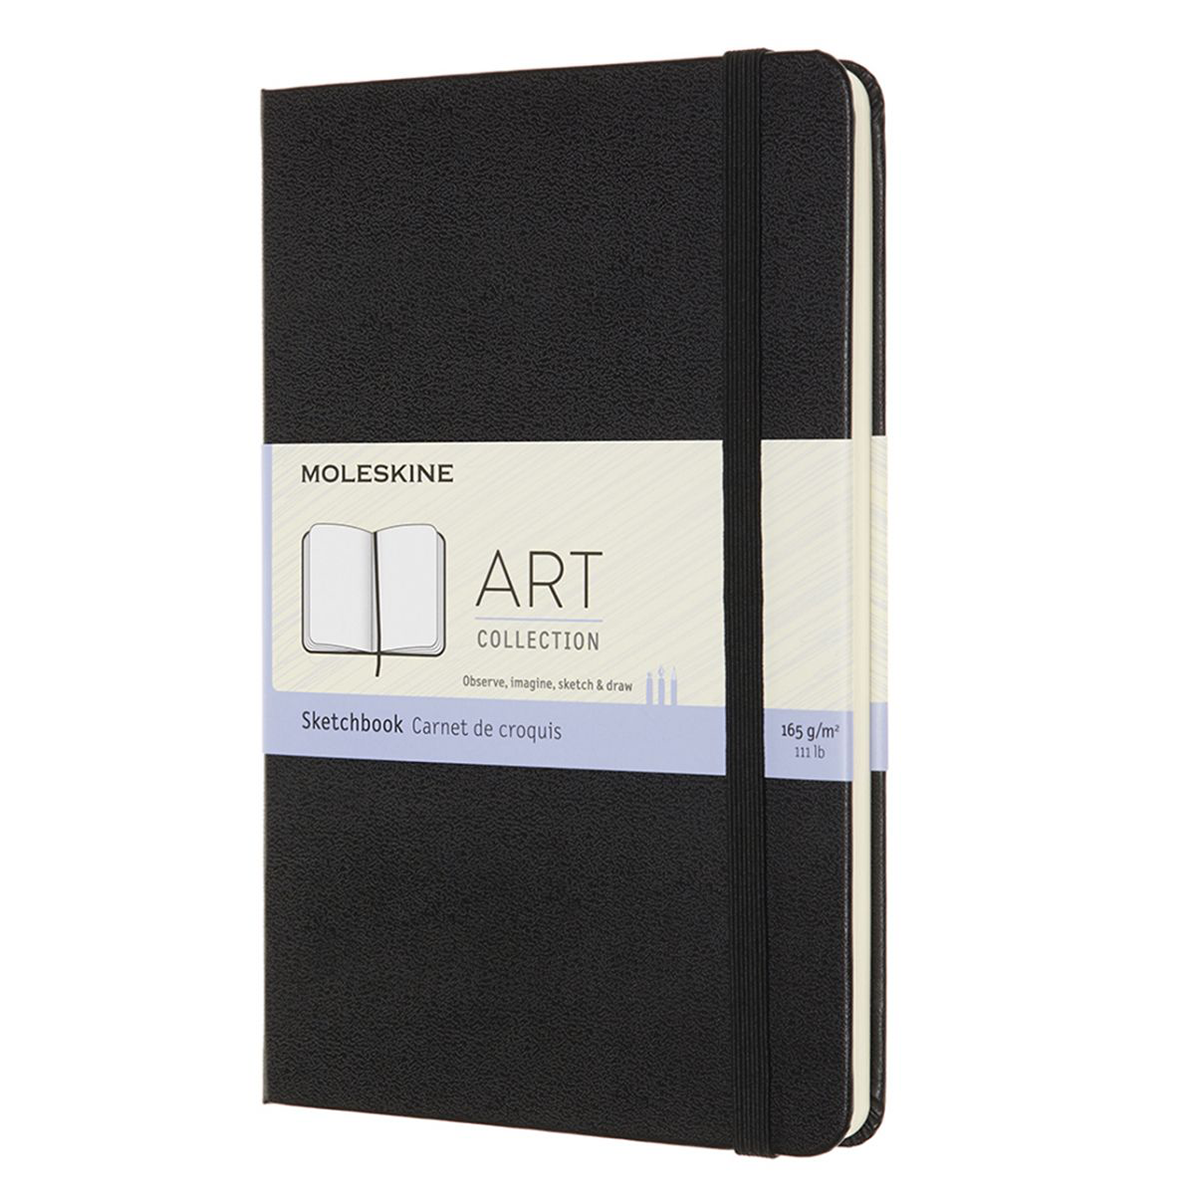 Black Paper Sketchbook: Black paper sketchbook for gel pens, 100 pages of  black blank paper, black paper sketchbooks for drawing, black paper